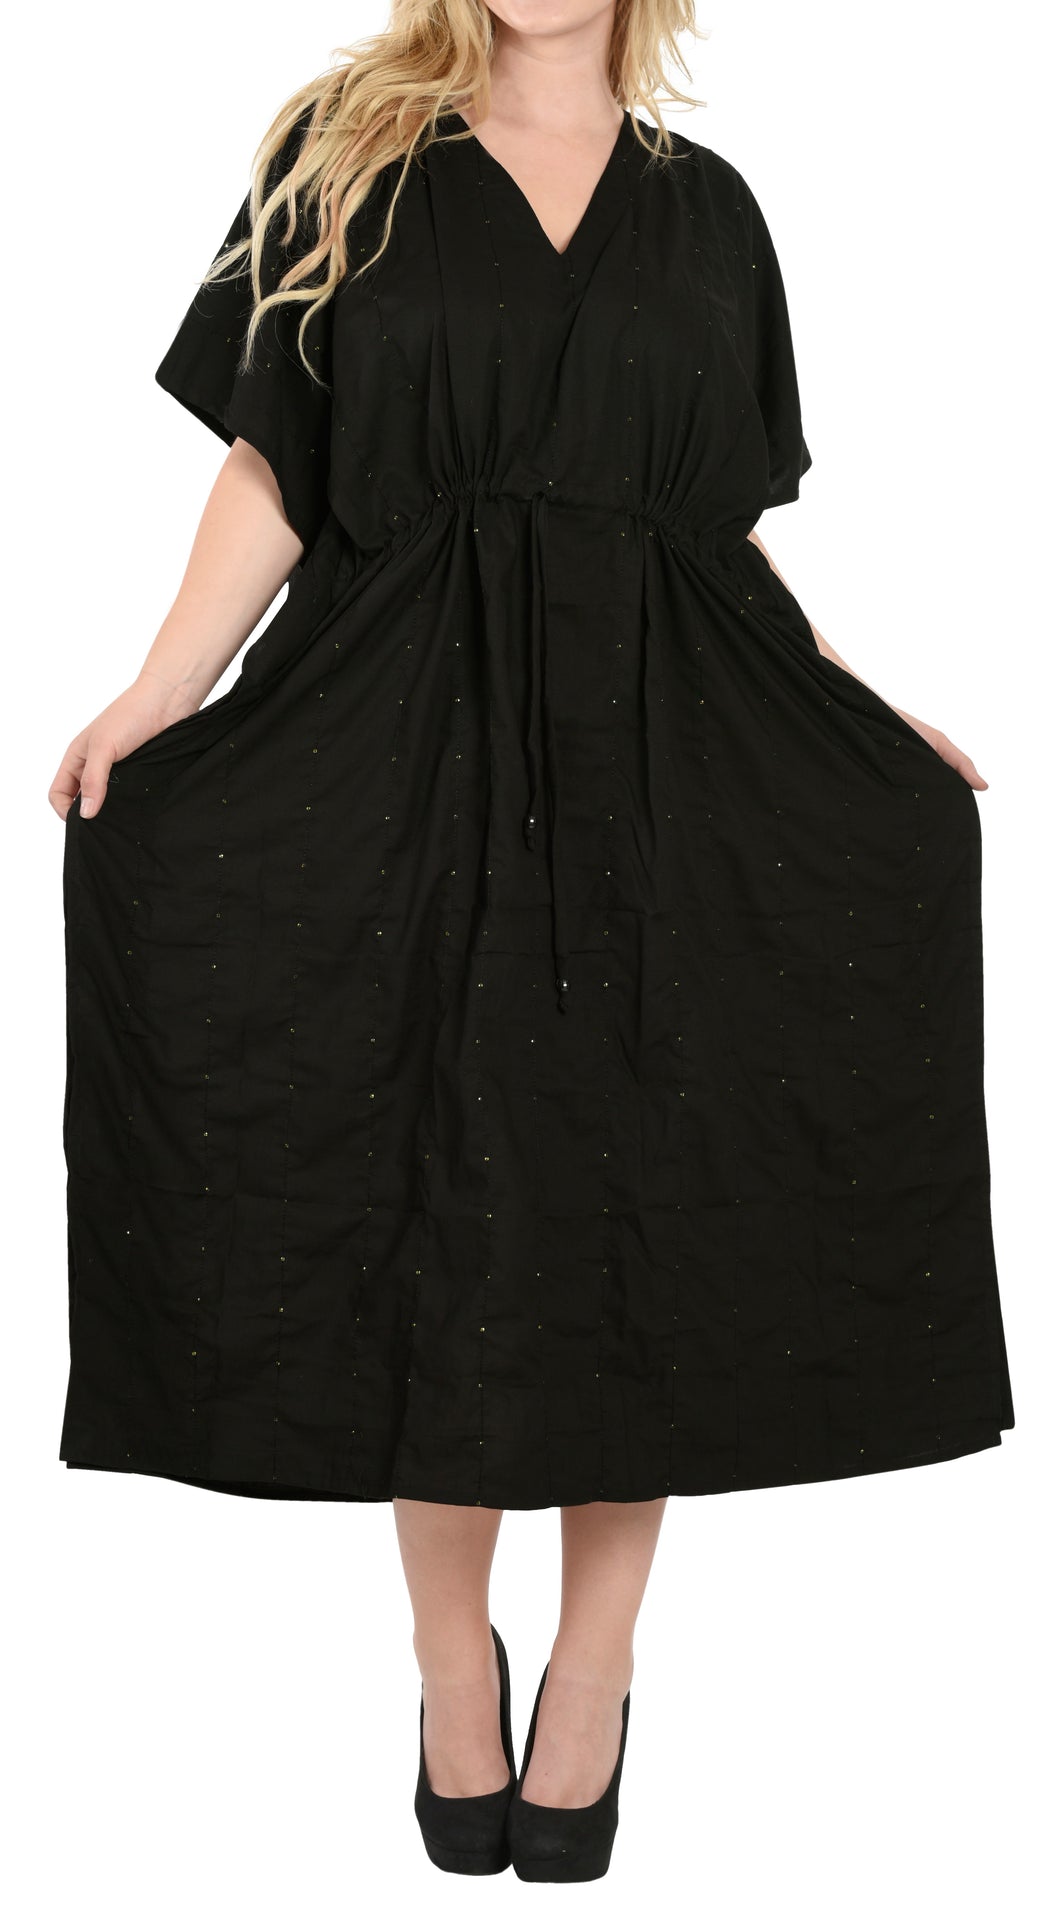 la-leela-pv-solid-long-caftan-kimono-dress-women-black_2098-osfm-14-18w-l-2x-black_r849